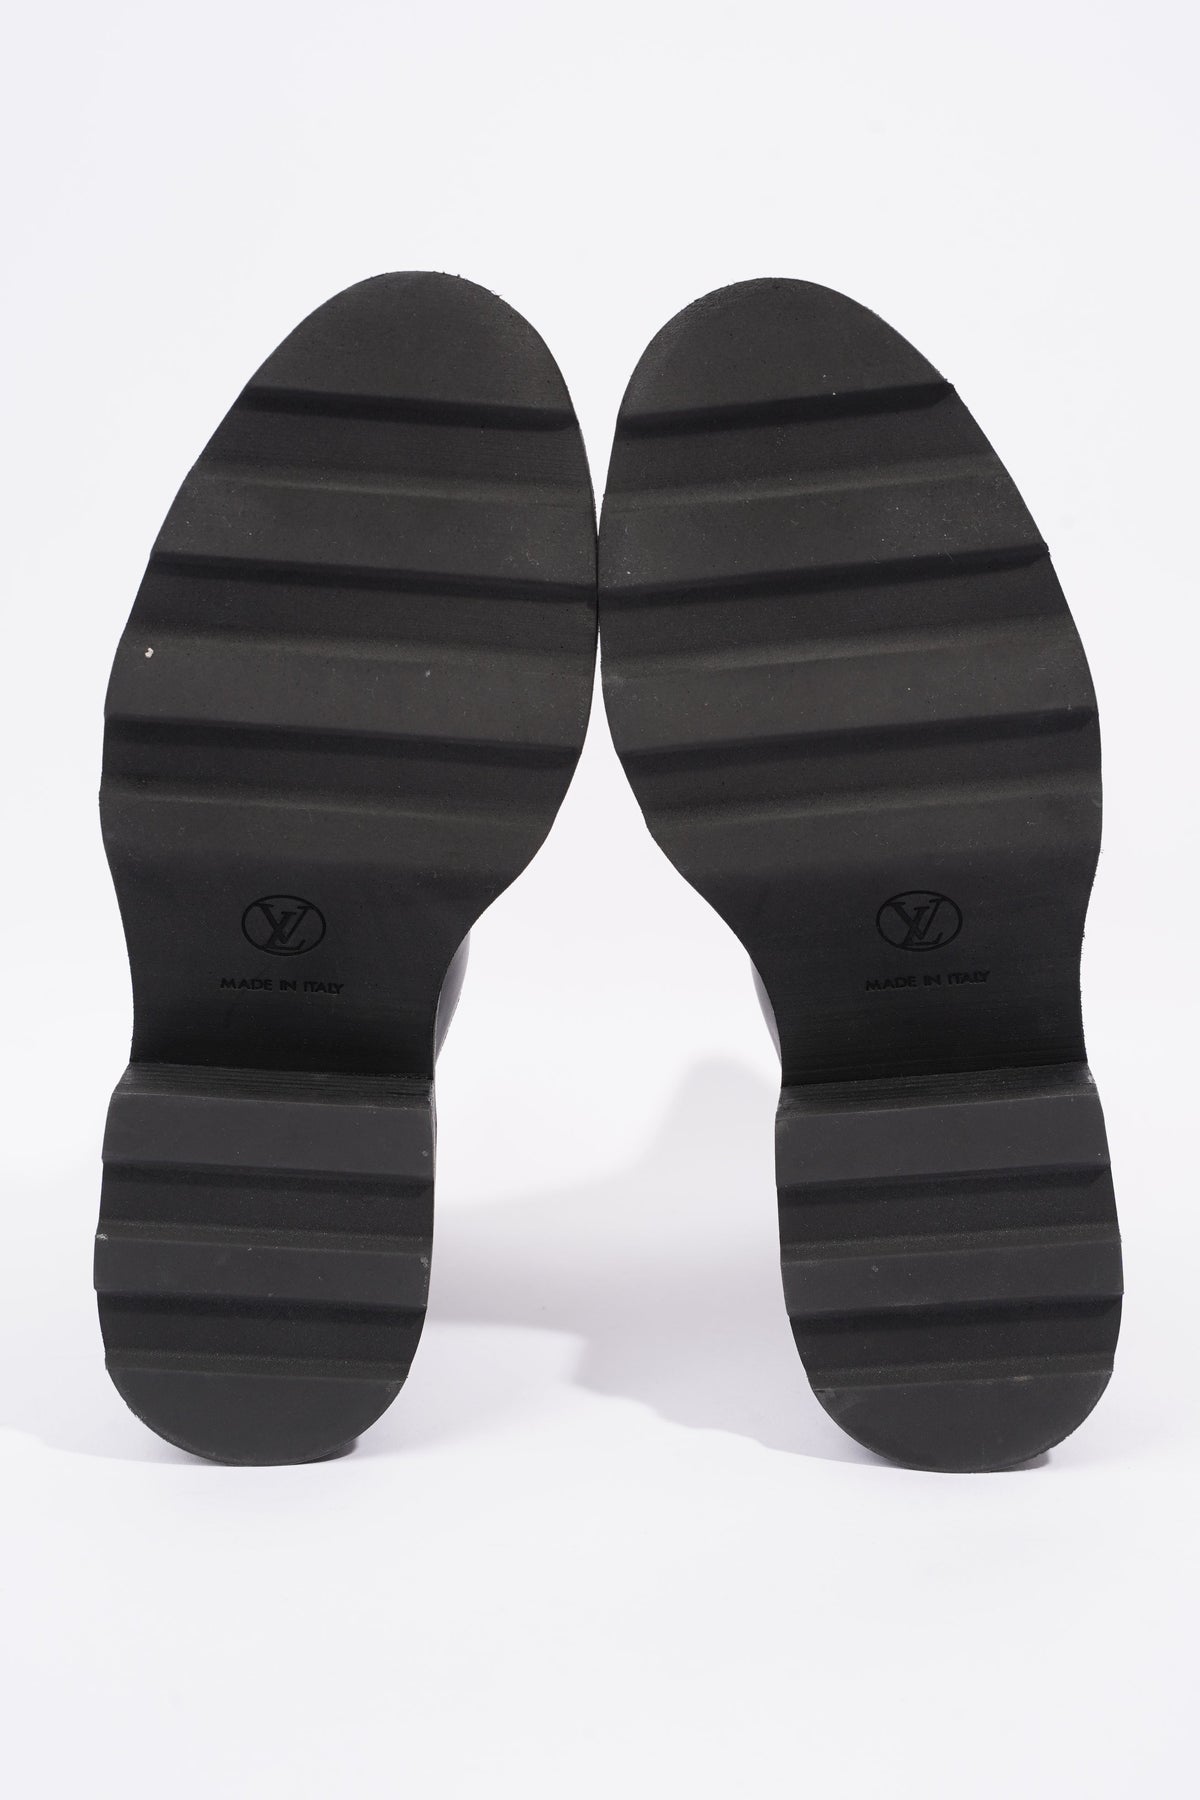 Louis Vuitton LV Record Chelsea Boot BLACK. Size 38.0